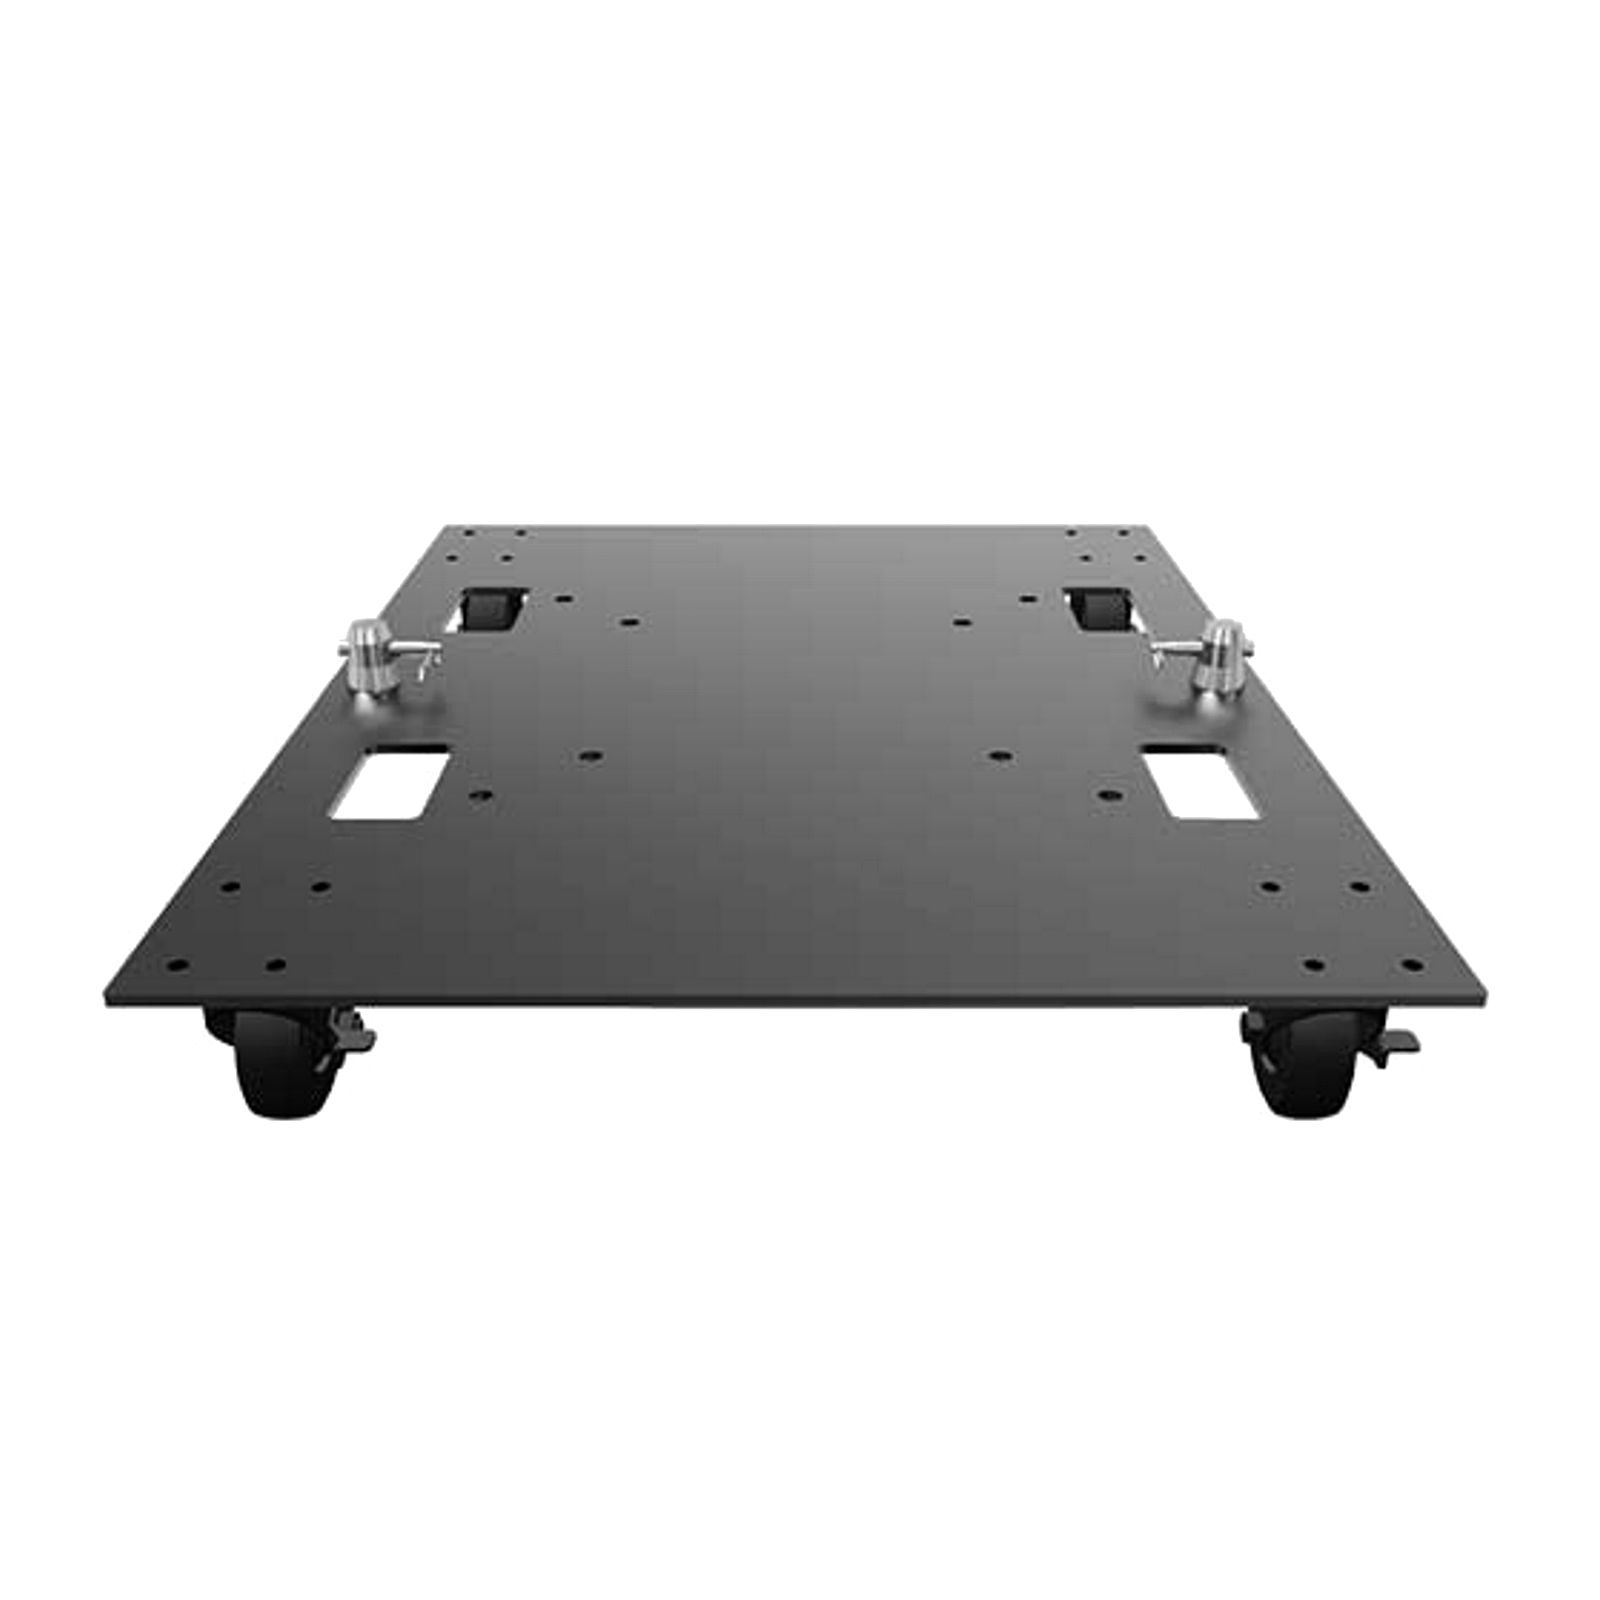 Global Truss Steel Base Plate with Casters Wheels 24 x 30 [Base Plate 24X30WC] 239656 Accessories Digital DJ Gear